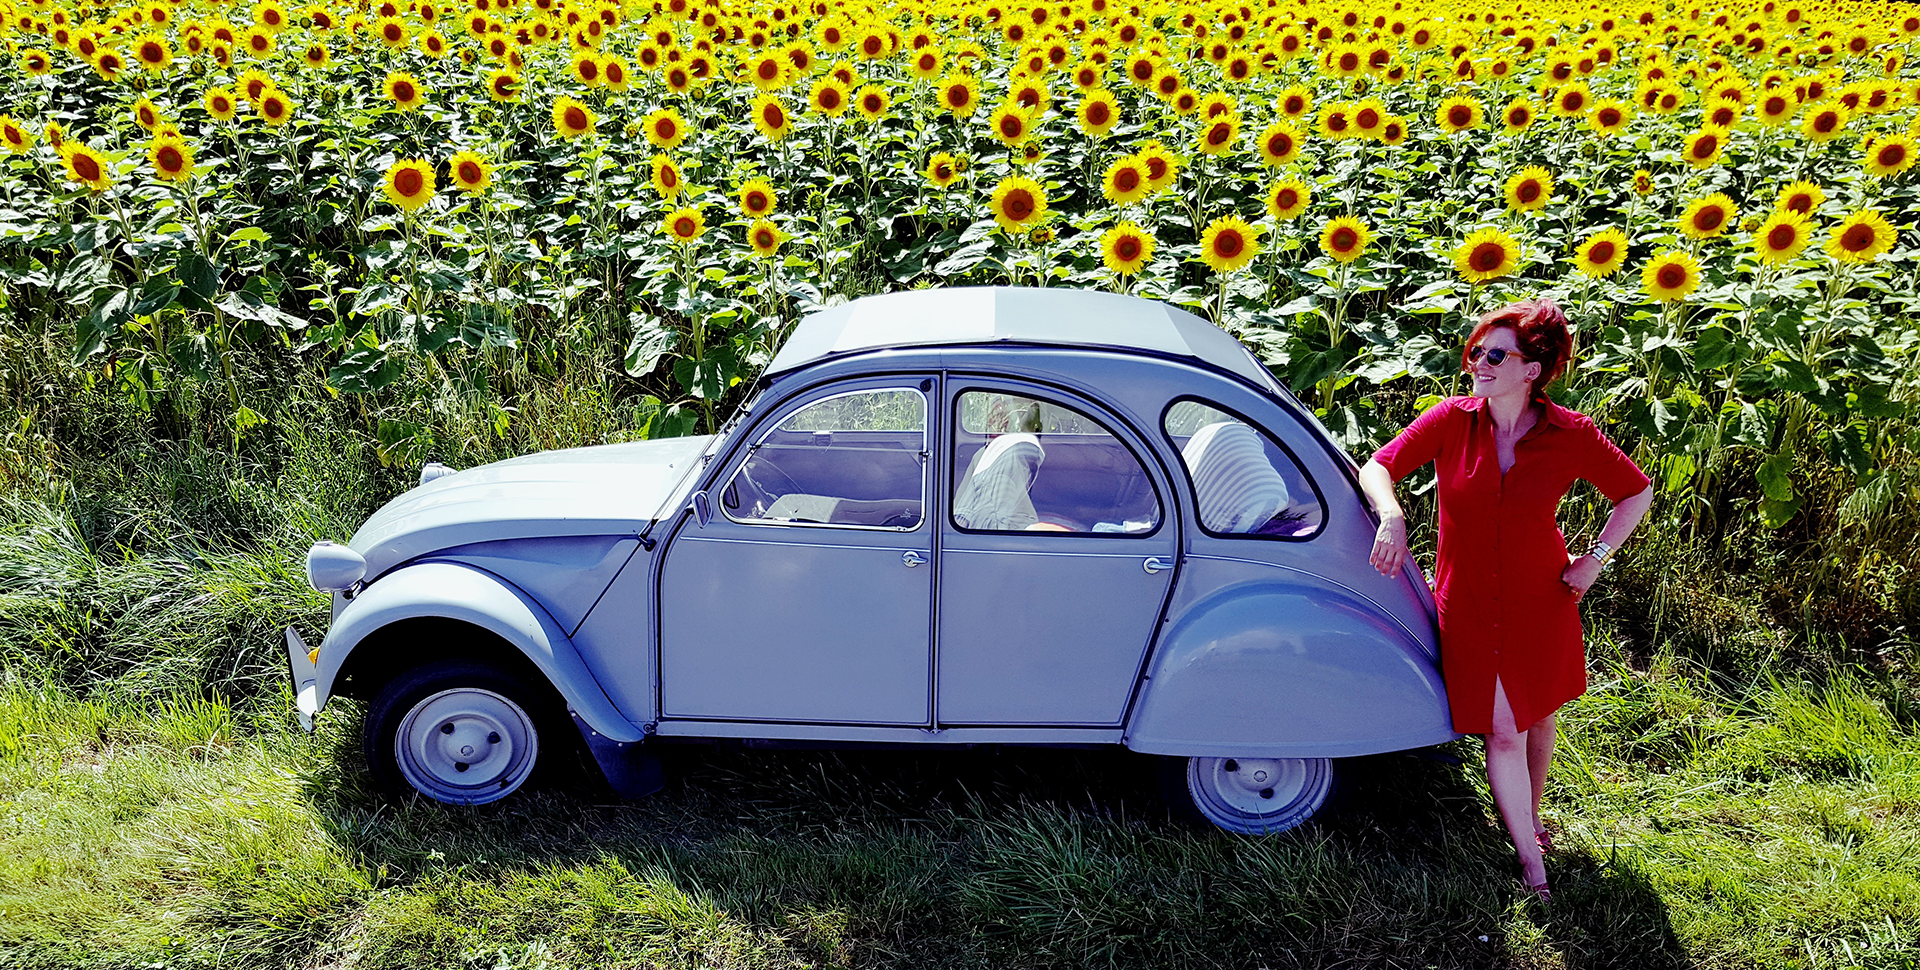 Female adventure speaker Lois Pryce by a 2CV car in a field of sunflowers